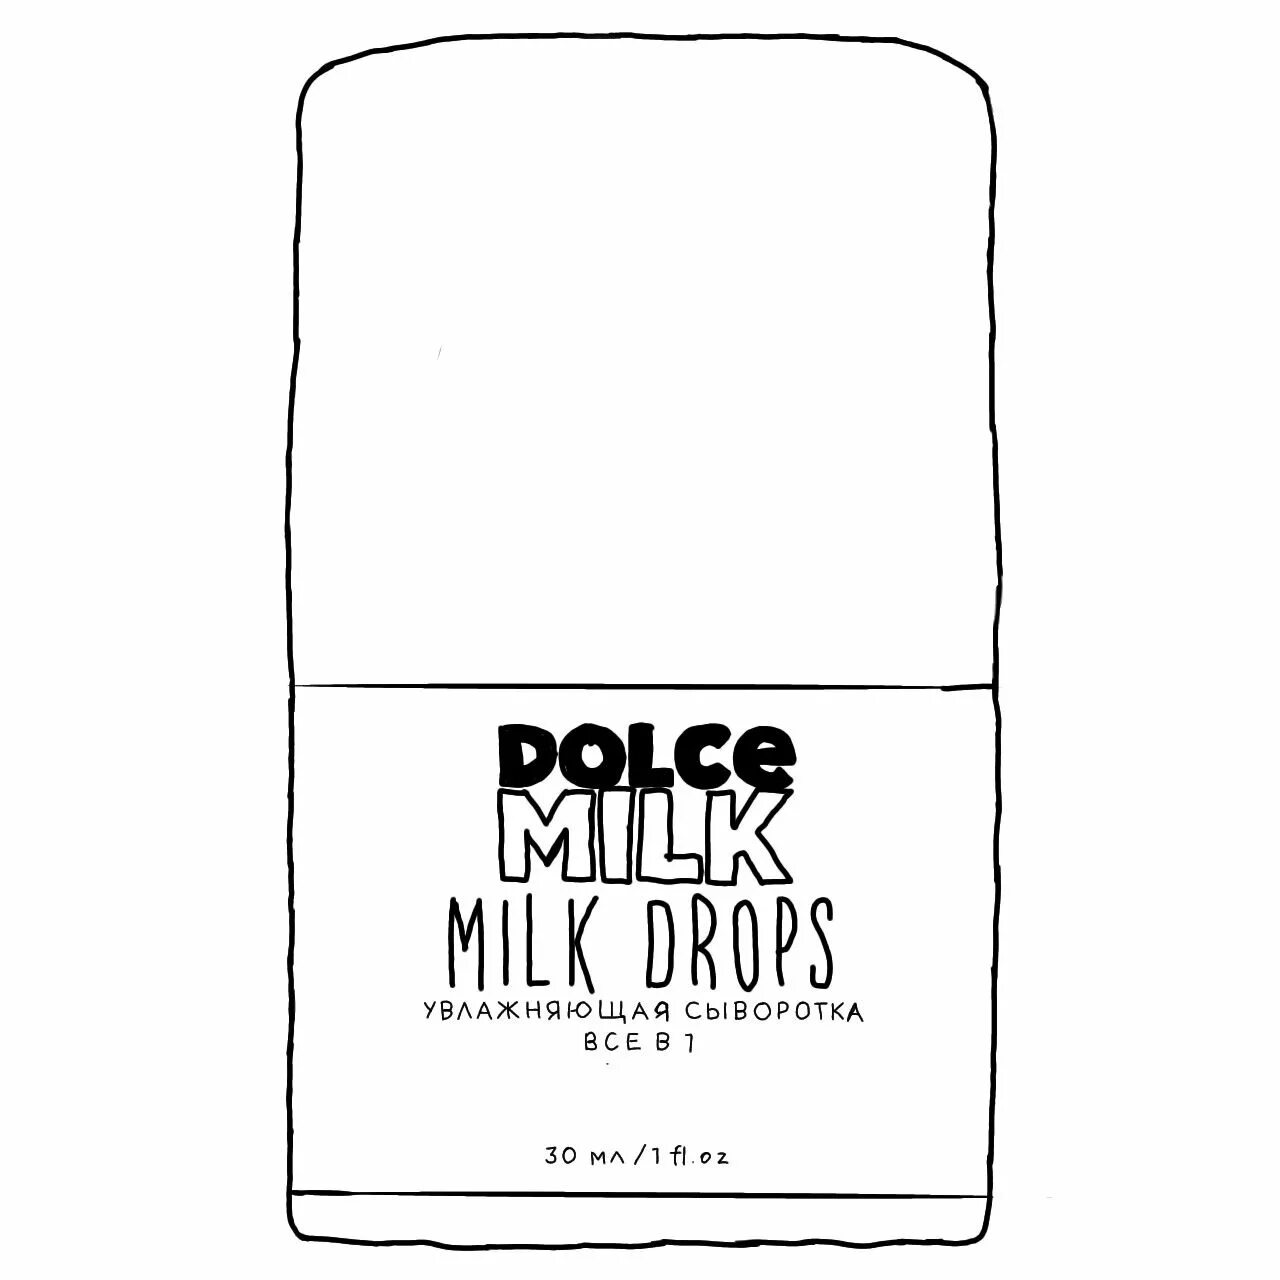 Dolce milk black white #12